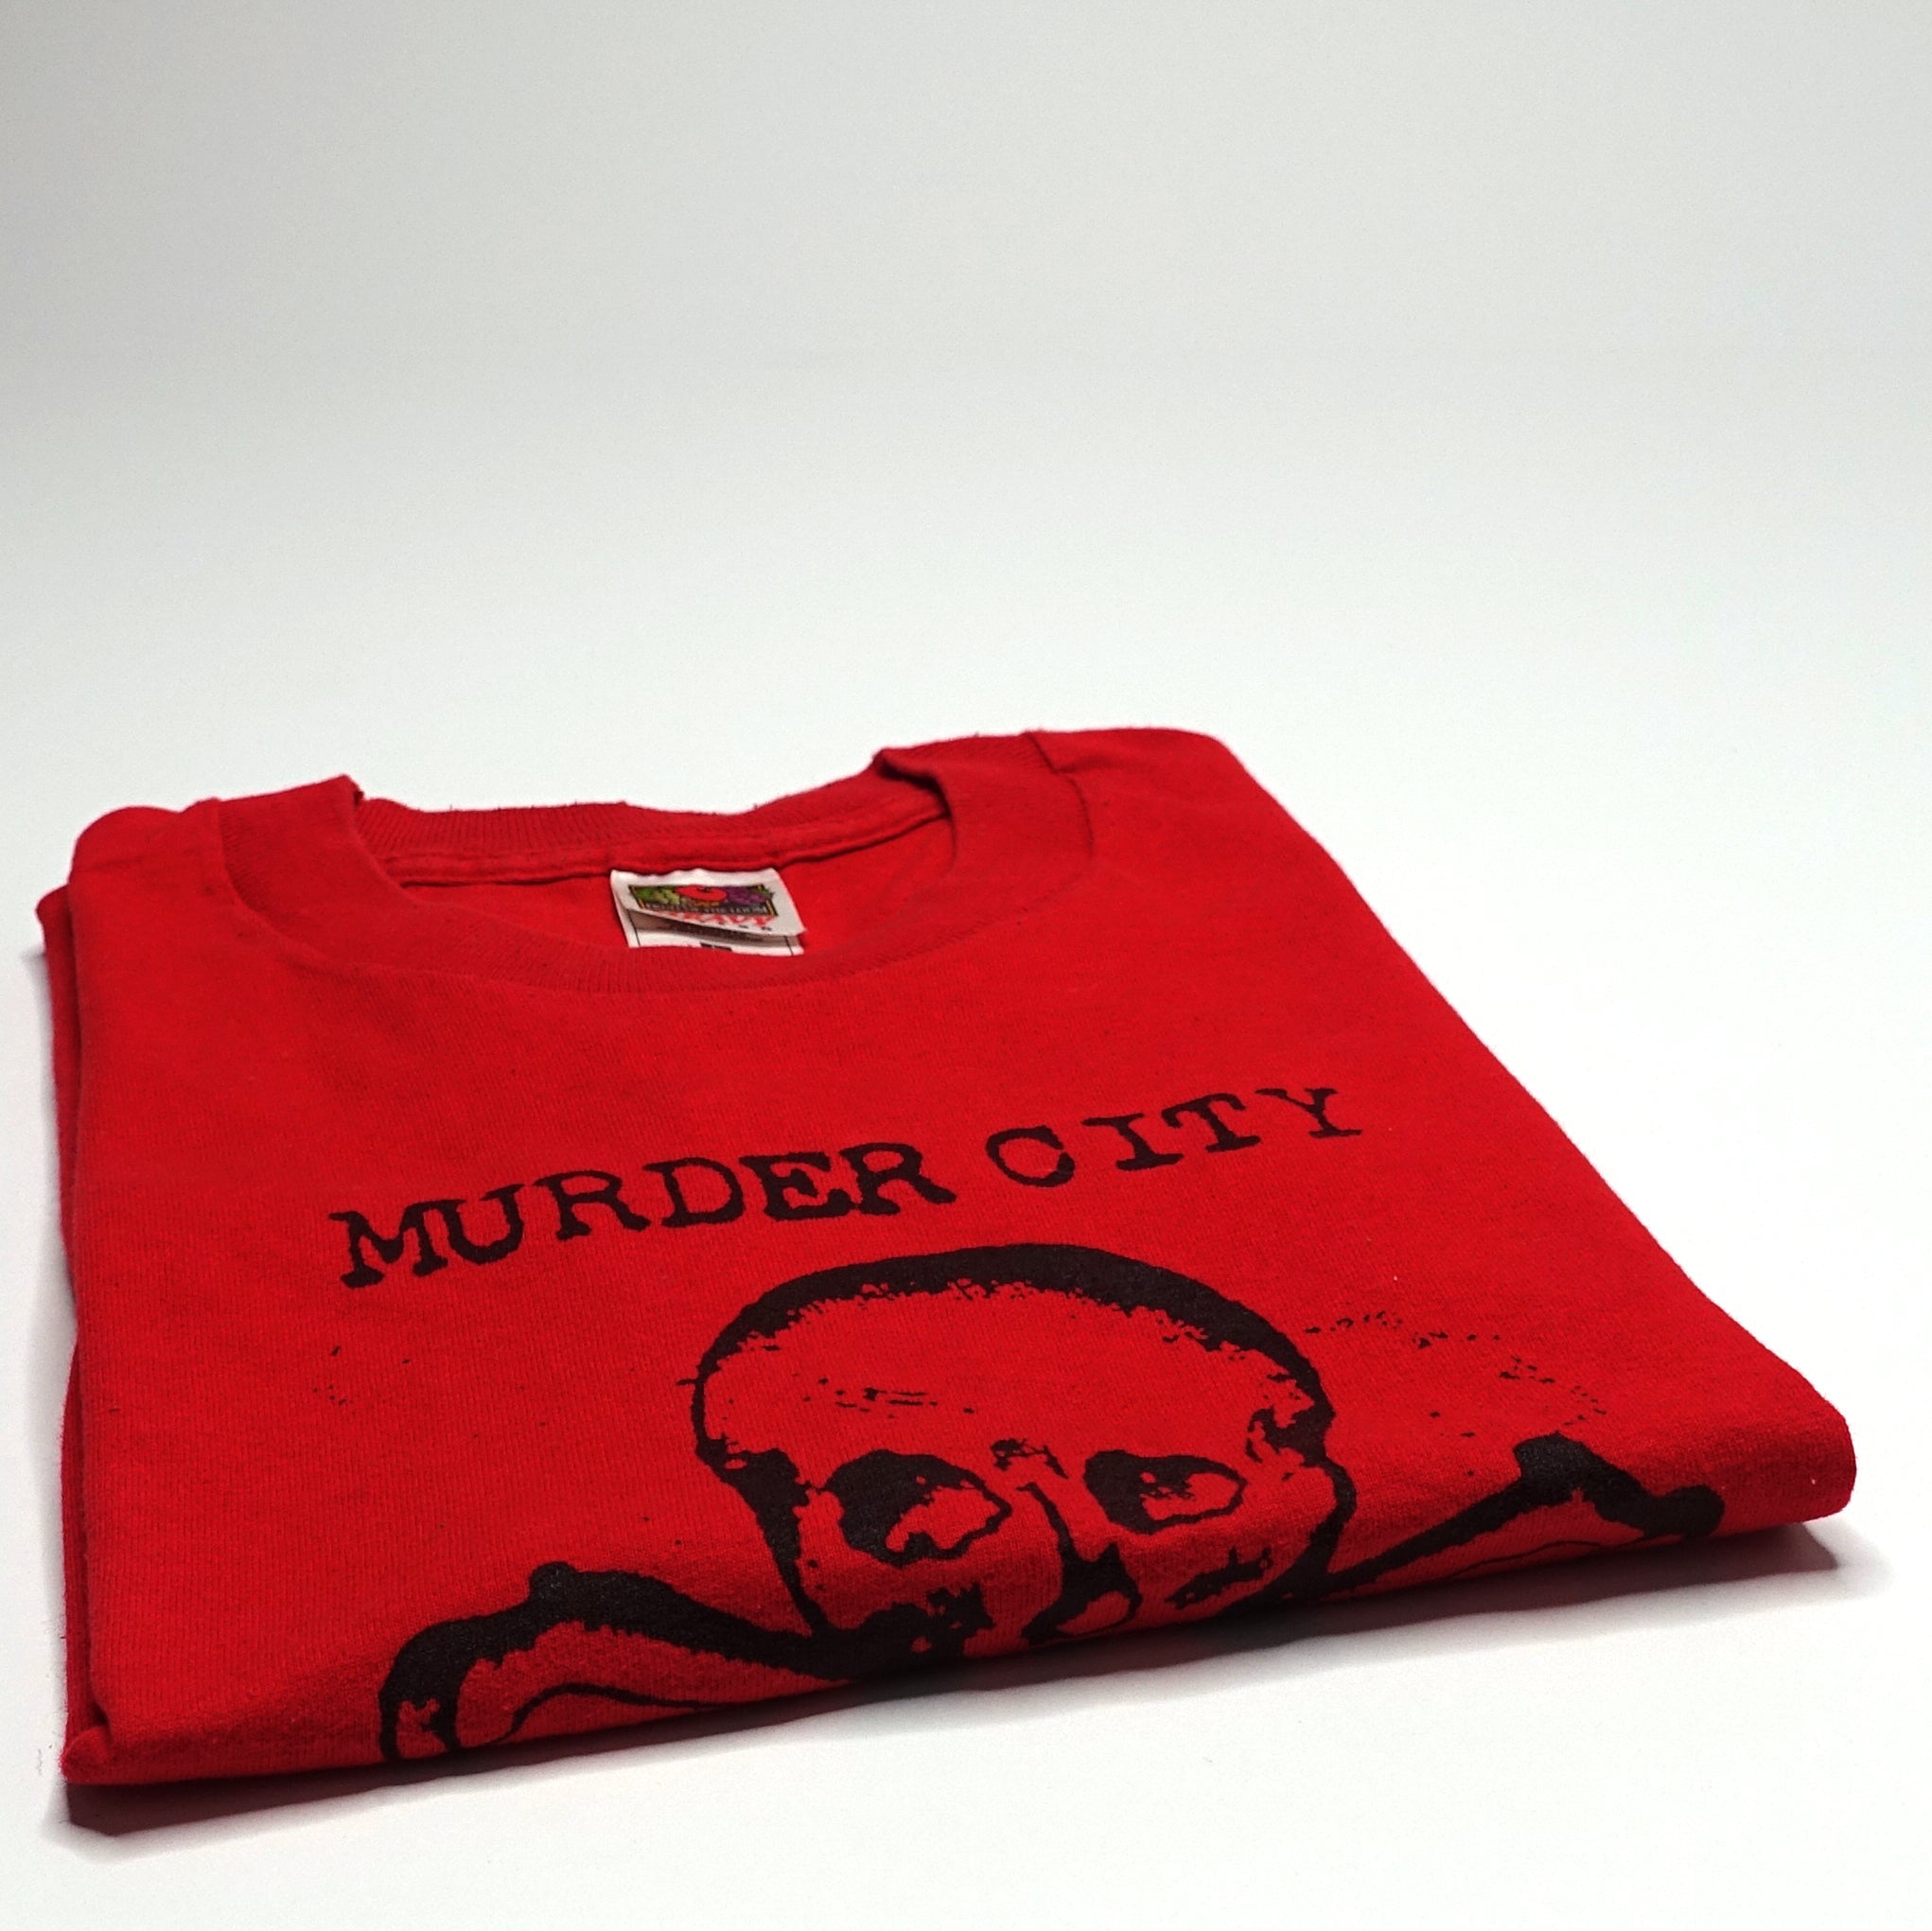 Murder City Devils ‎– Dancehall Music Skull And Cross Bones Shirt Red Size Large